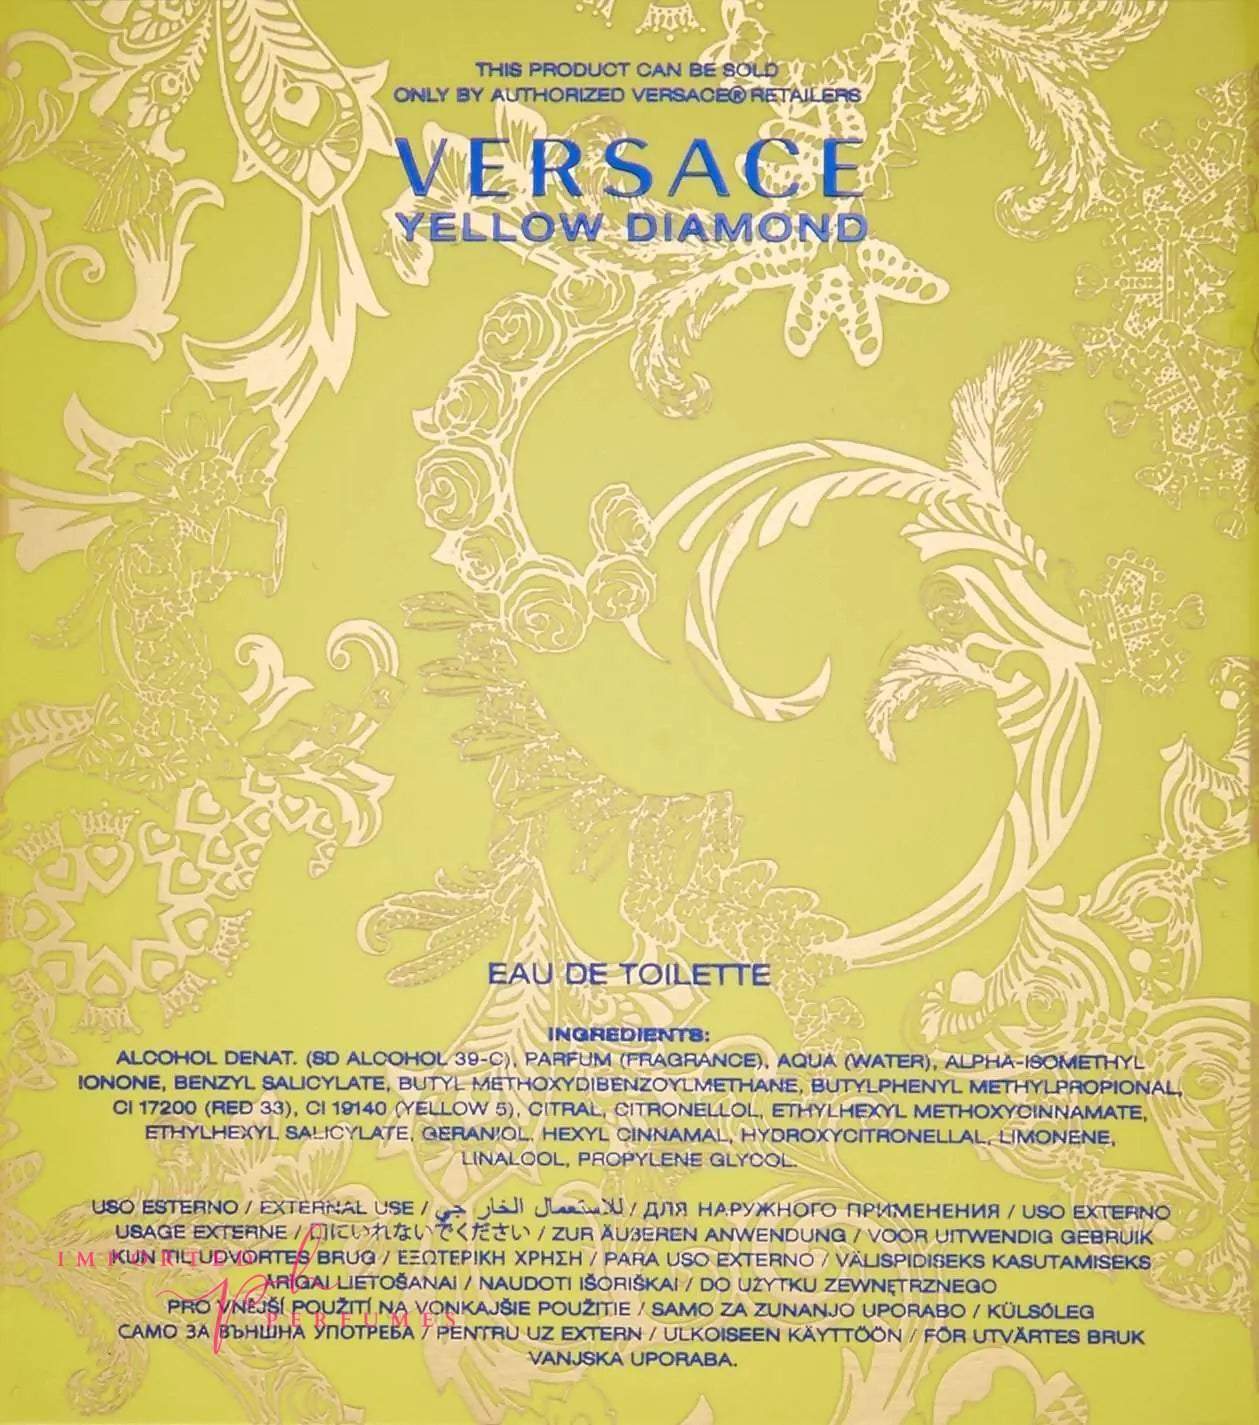 Versace Yellow Diamond For Women Eau de Toilette 90ml-Imported Perfumes Co-for women,Versace,women,yellow diamond